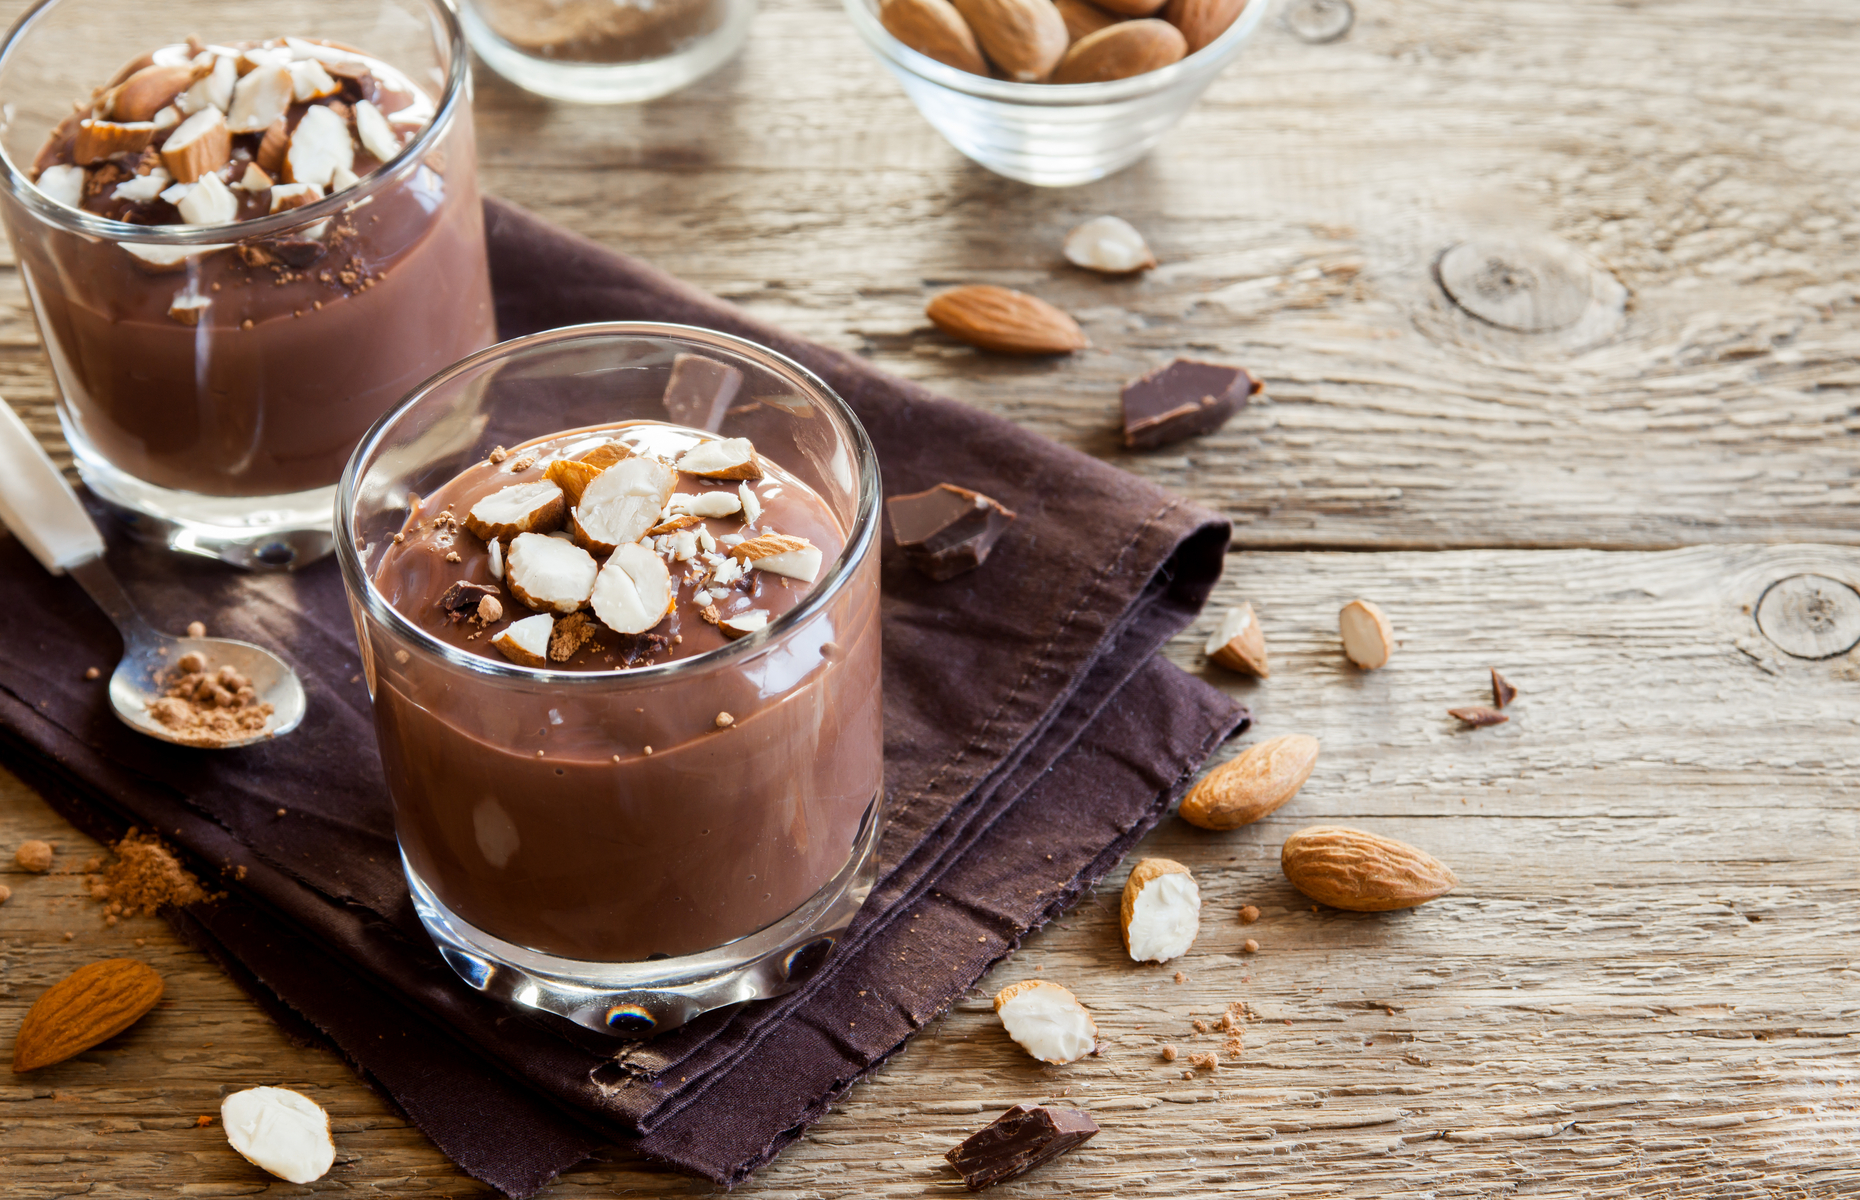 Healthy chocolate mousse (Image: Oksana Mizina/Shutterstock)